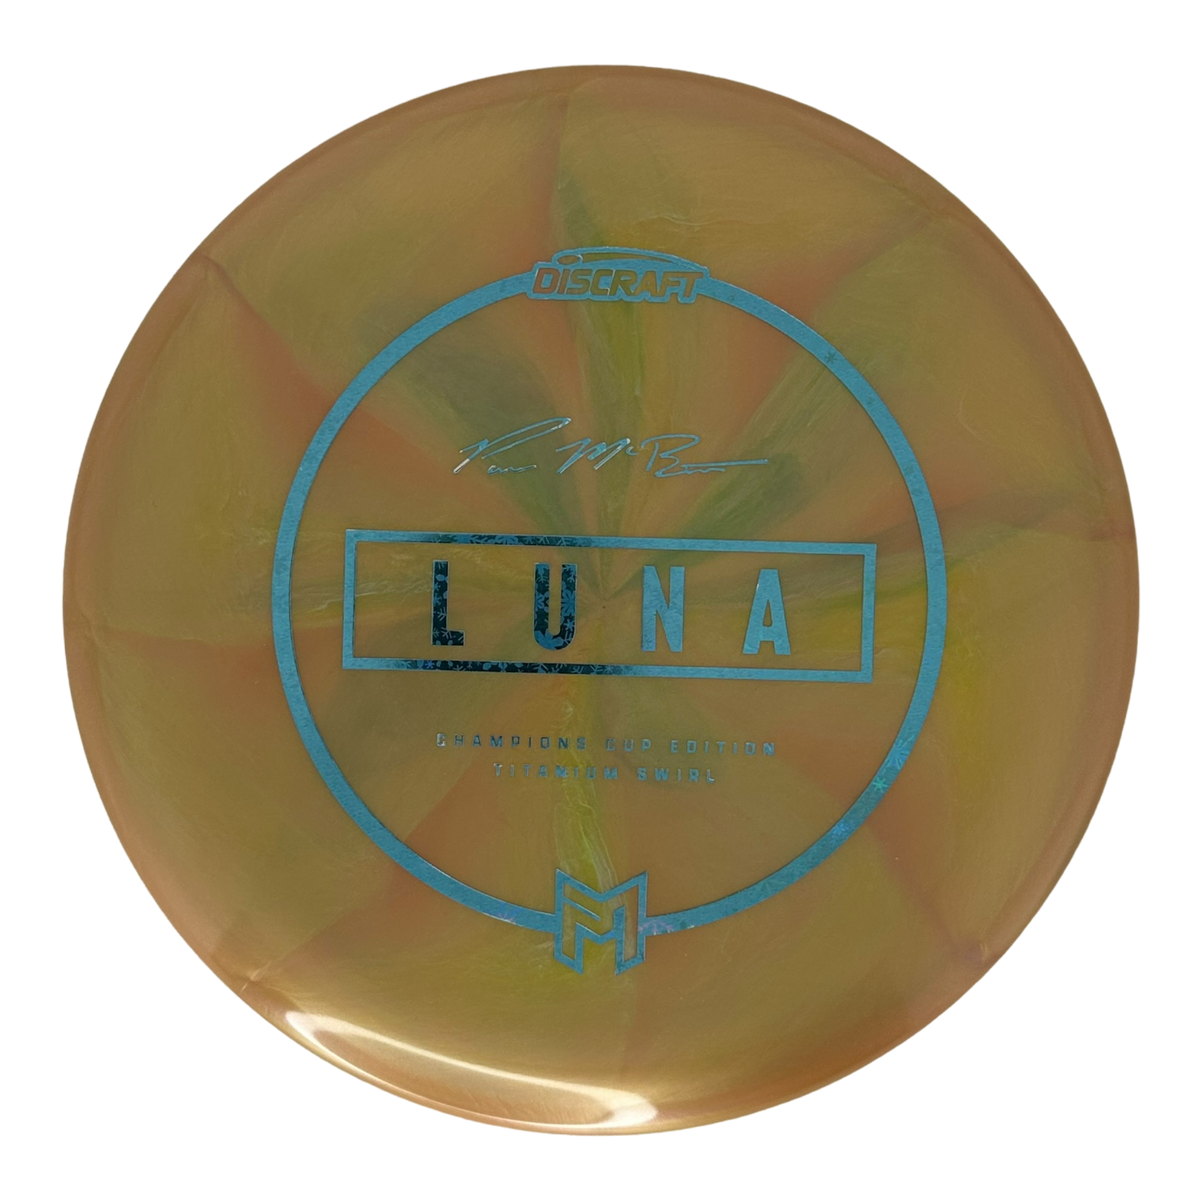 Discraft Paul McBeth TI Swirl Luna - 2024 Champions Cup Edition